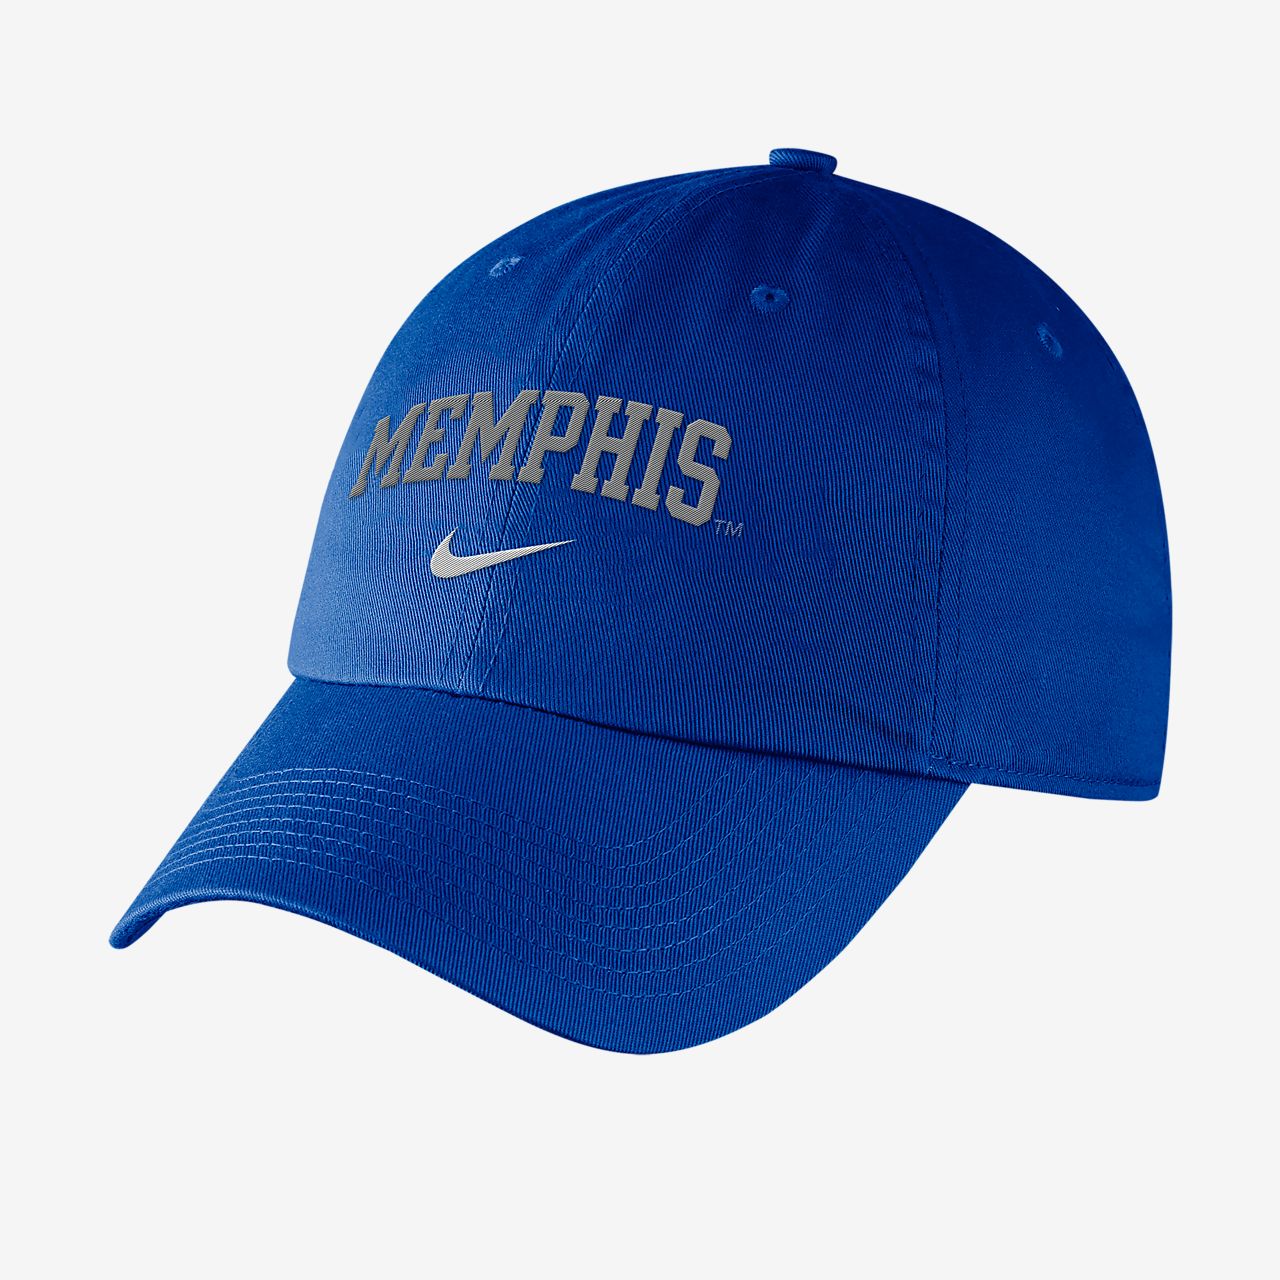 Nike College (Memphis) Cap. Nike.com